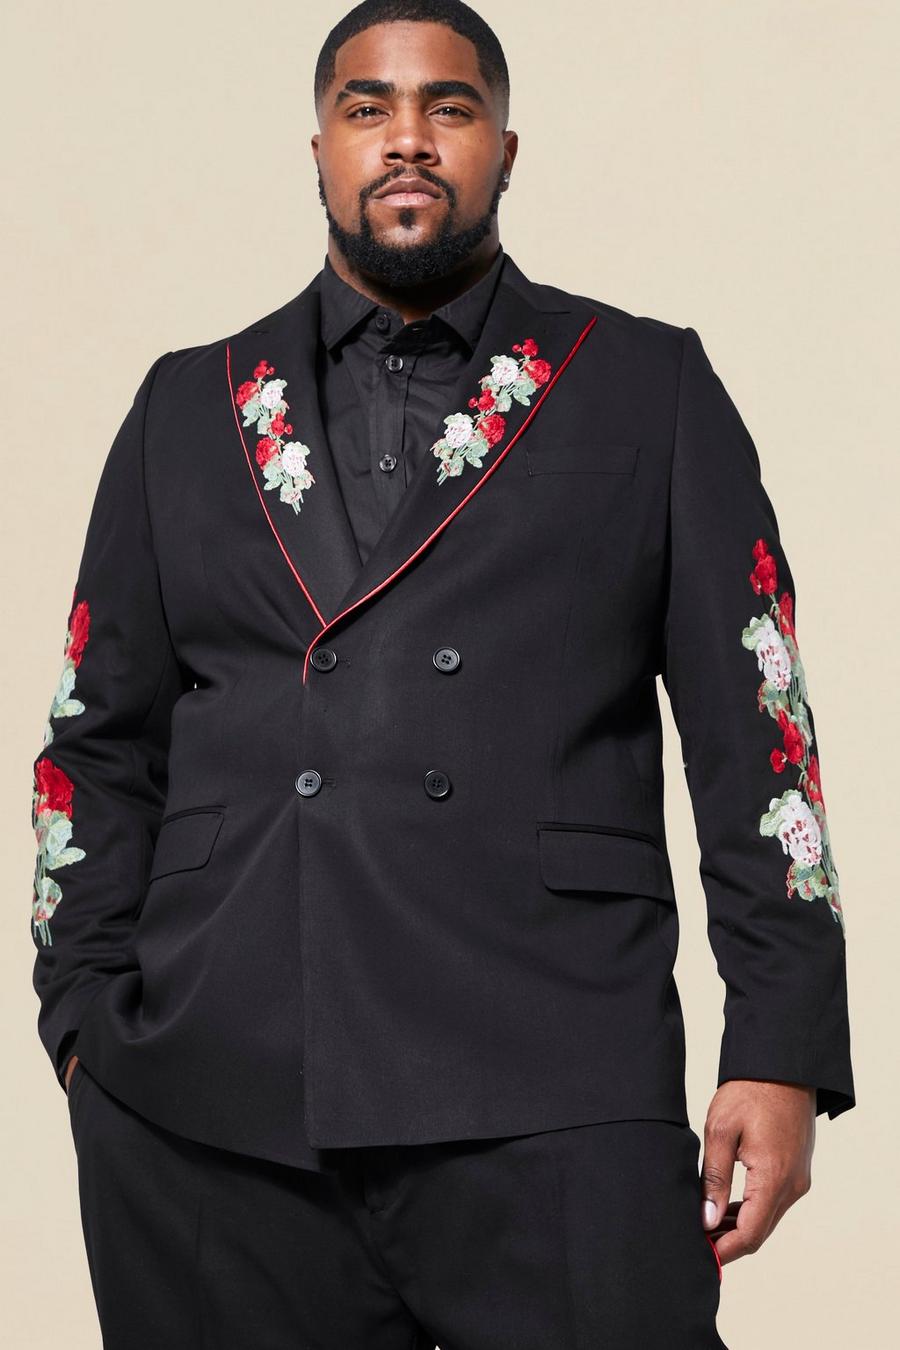 Black negro ז'קט חליפה סקיני עם דשים כפולים והדפס פרחוני, מידות גדולות